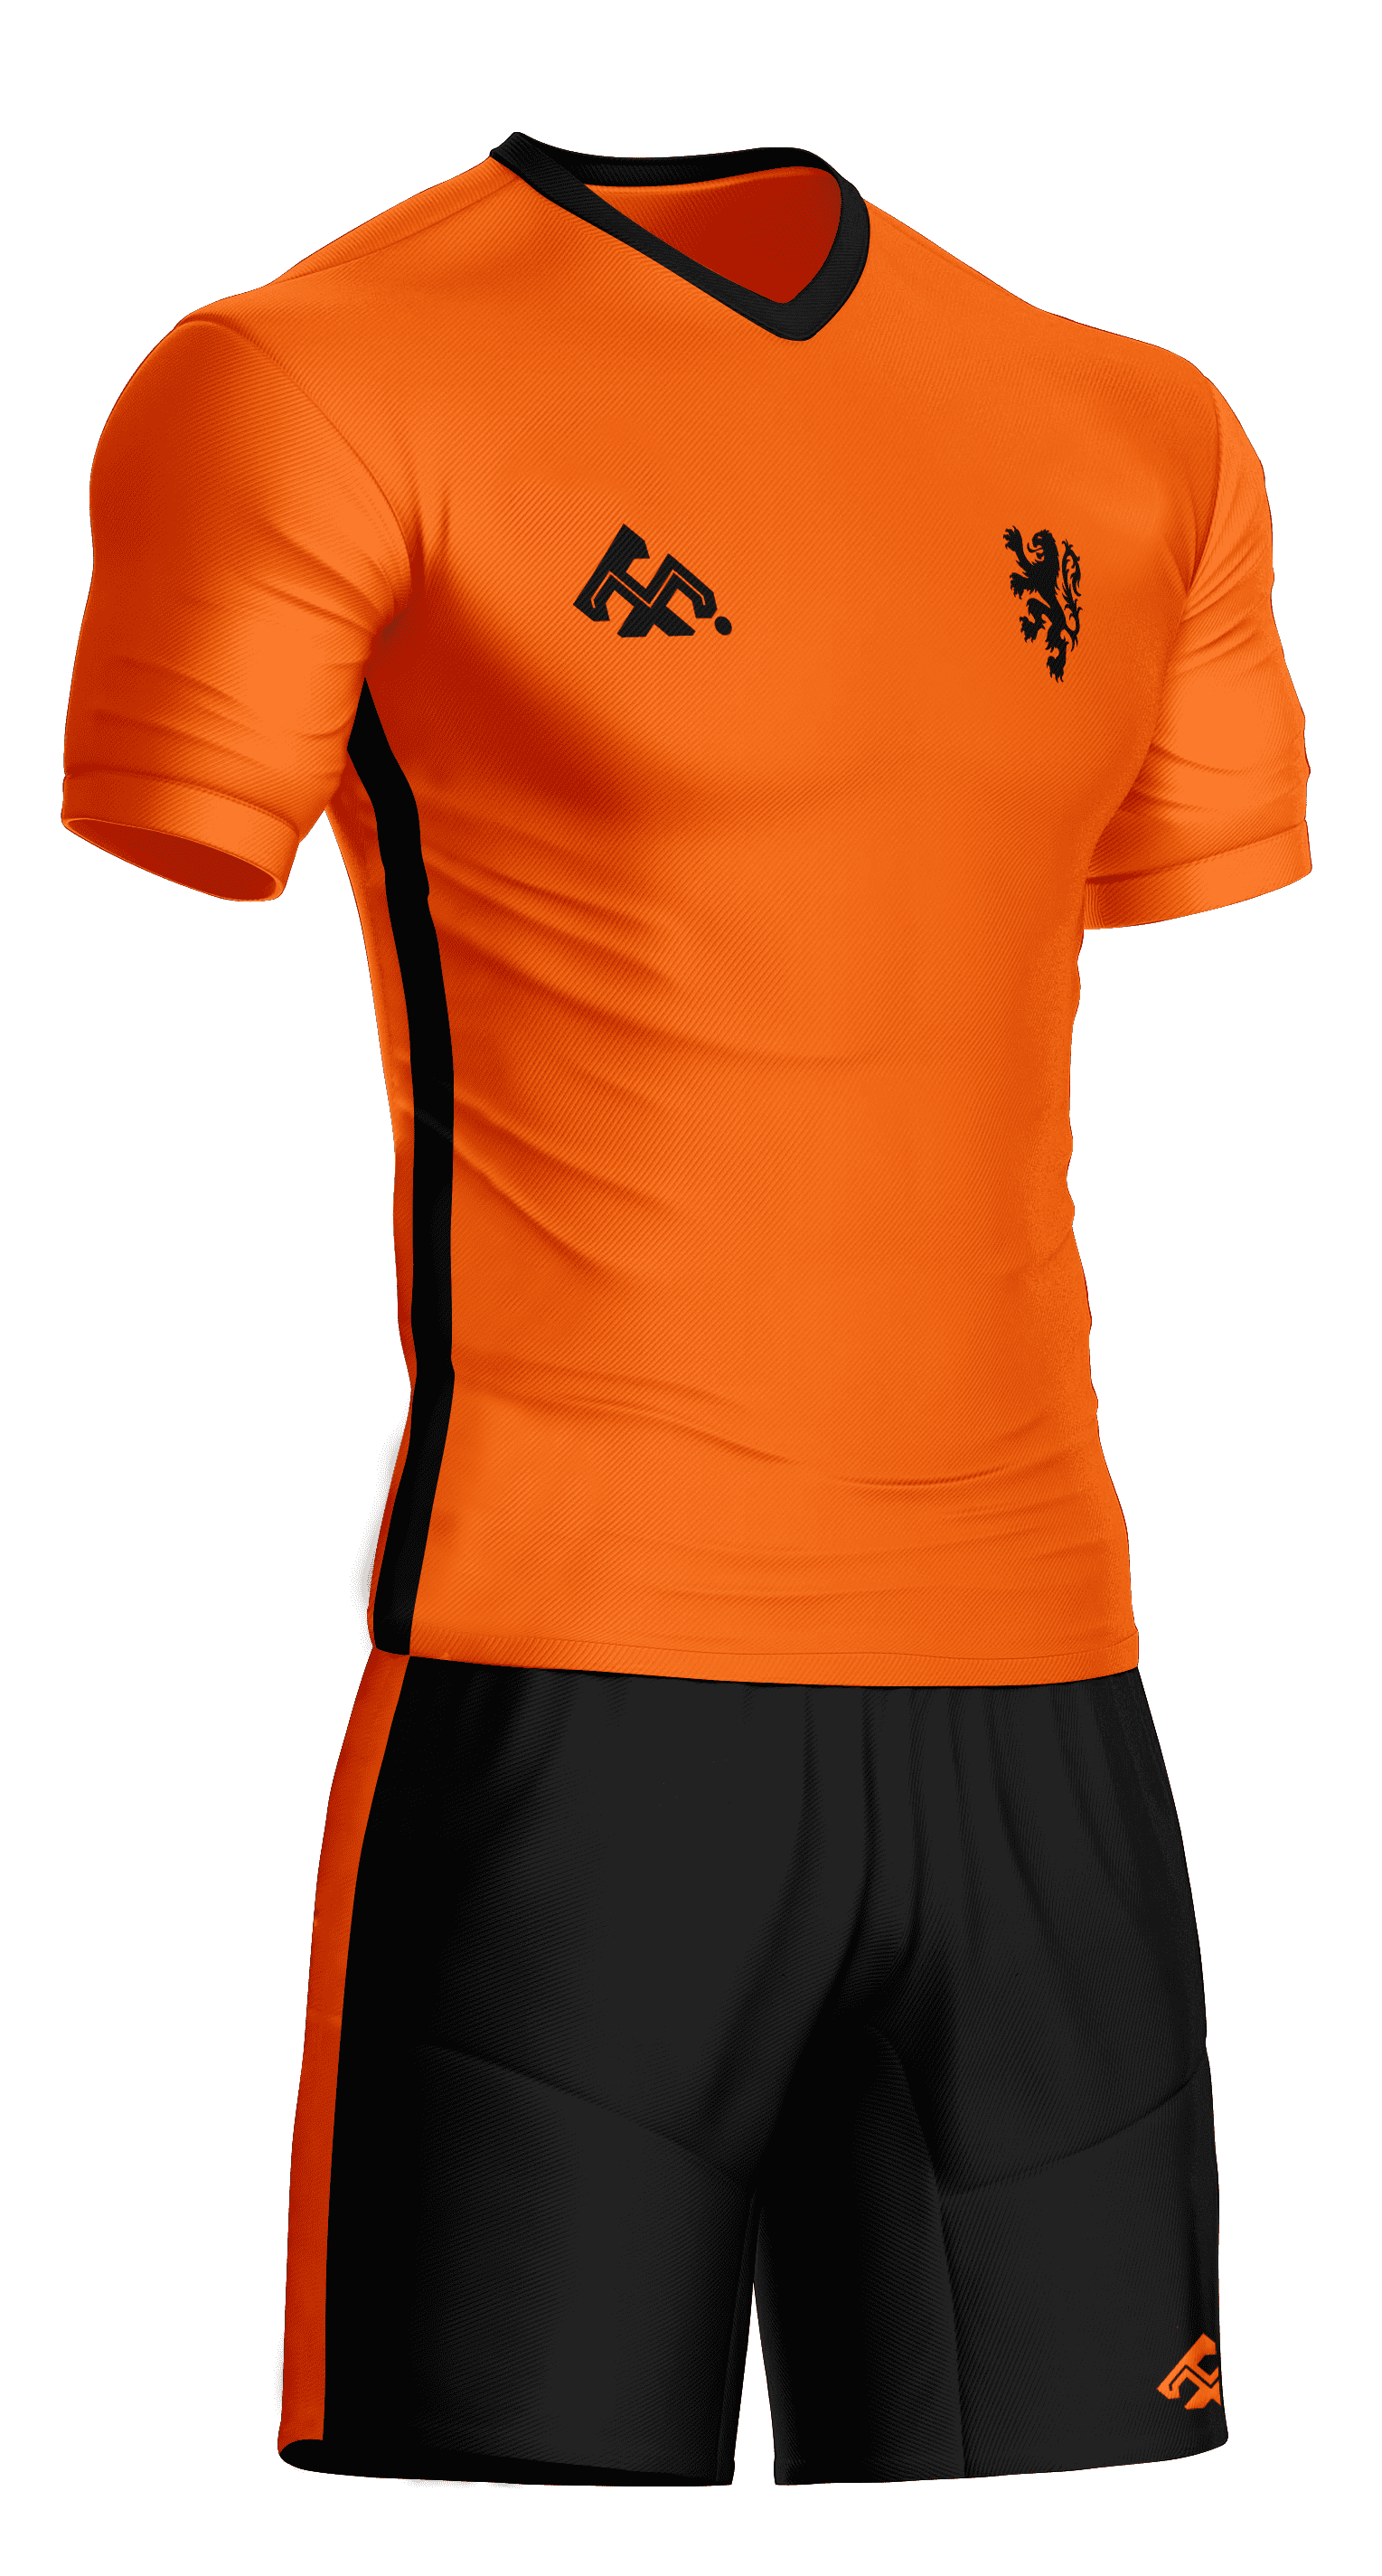 Holanda Janssen #527 (Naranja)